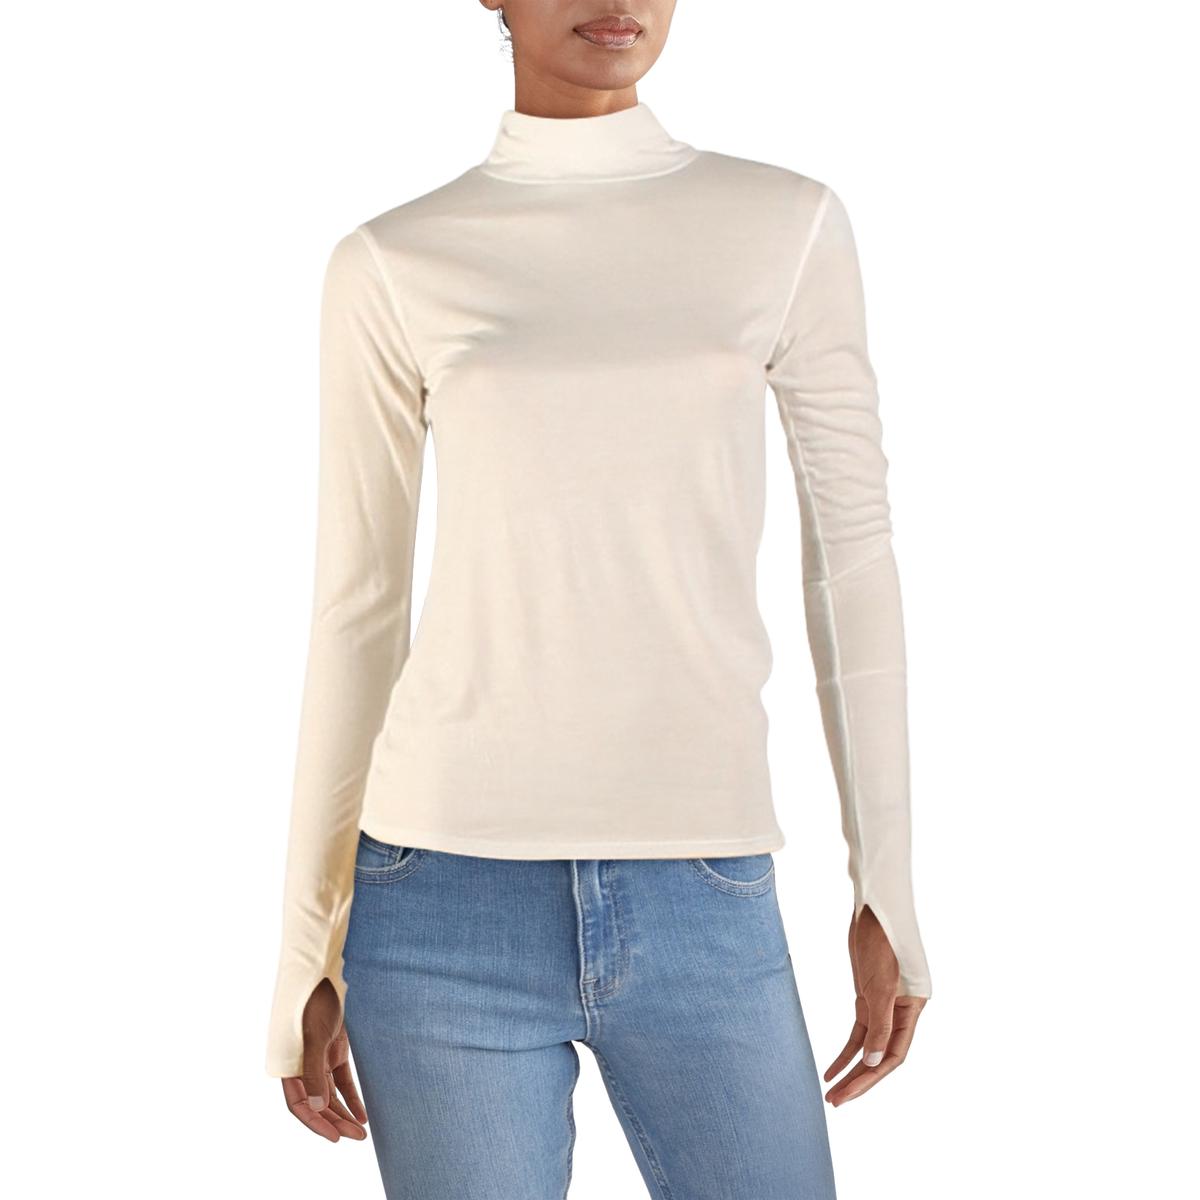 Aqua Womens White Sheer Long Sleeve Casual Turtleneck Top Shirt M BHFO ...